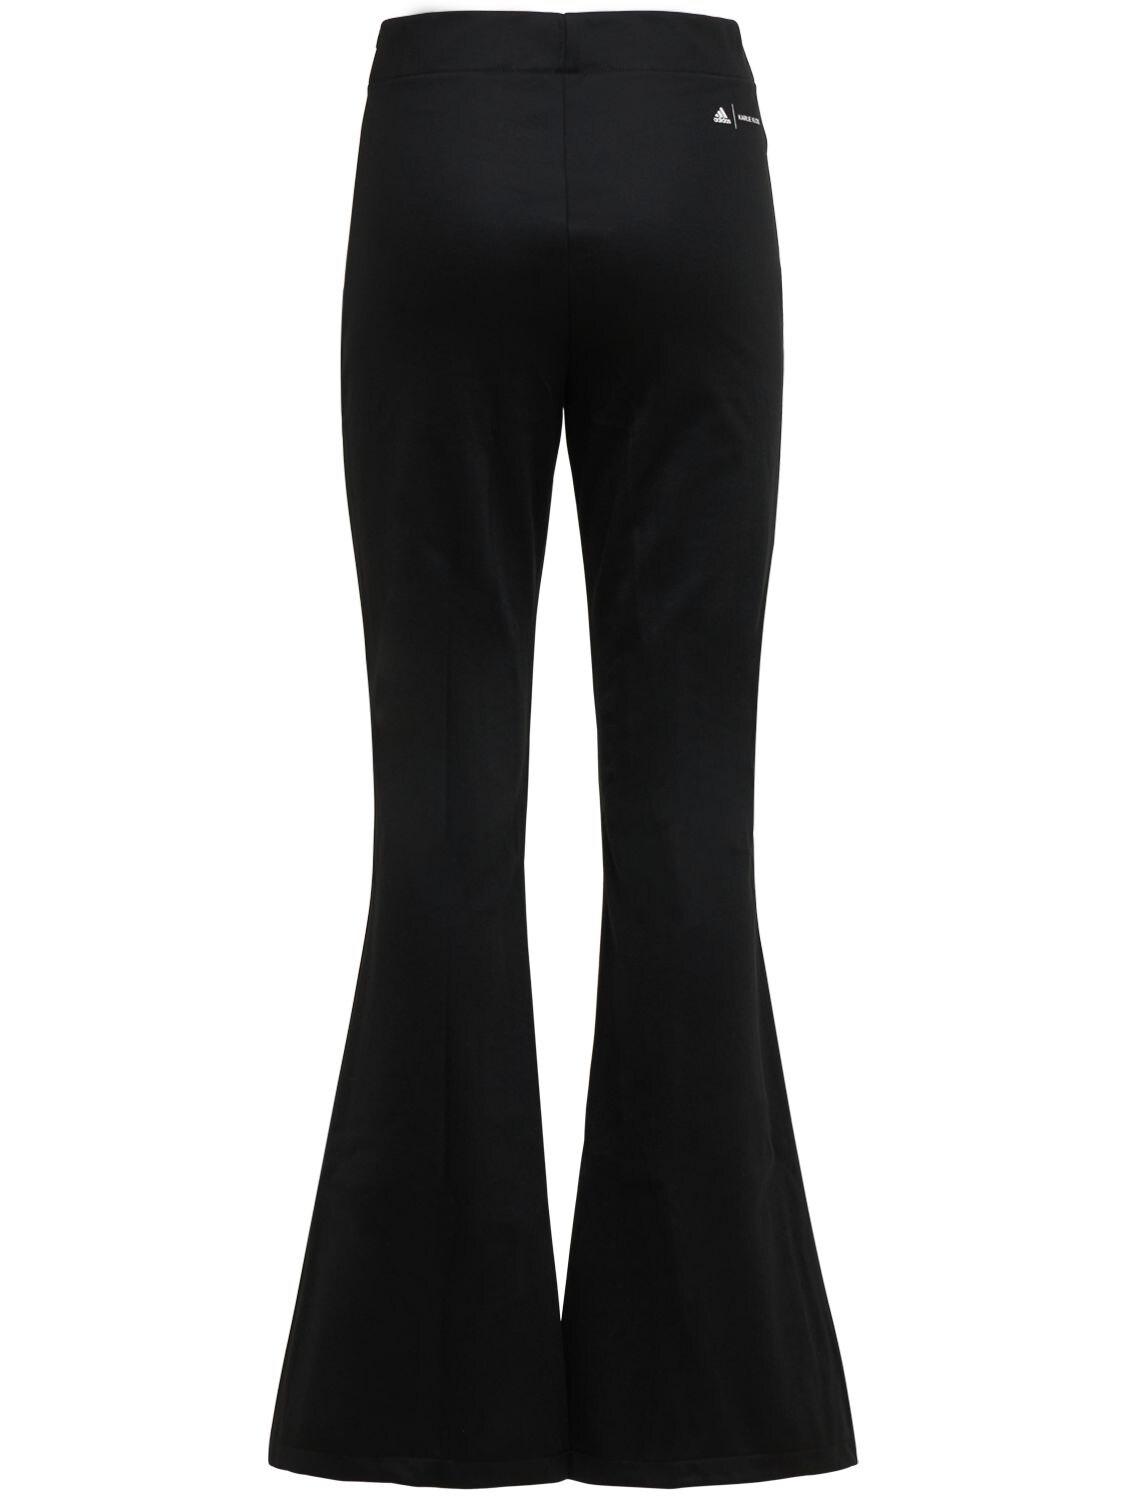 adidas Originals Karlie Kloss High Waist Flared Pants in Black | Lyst